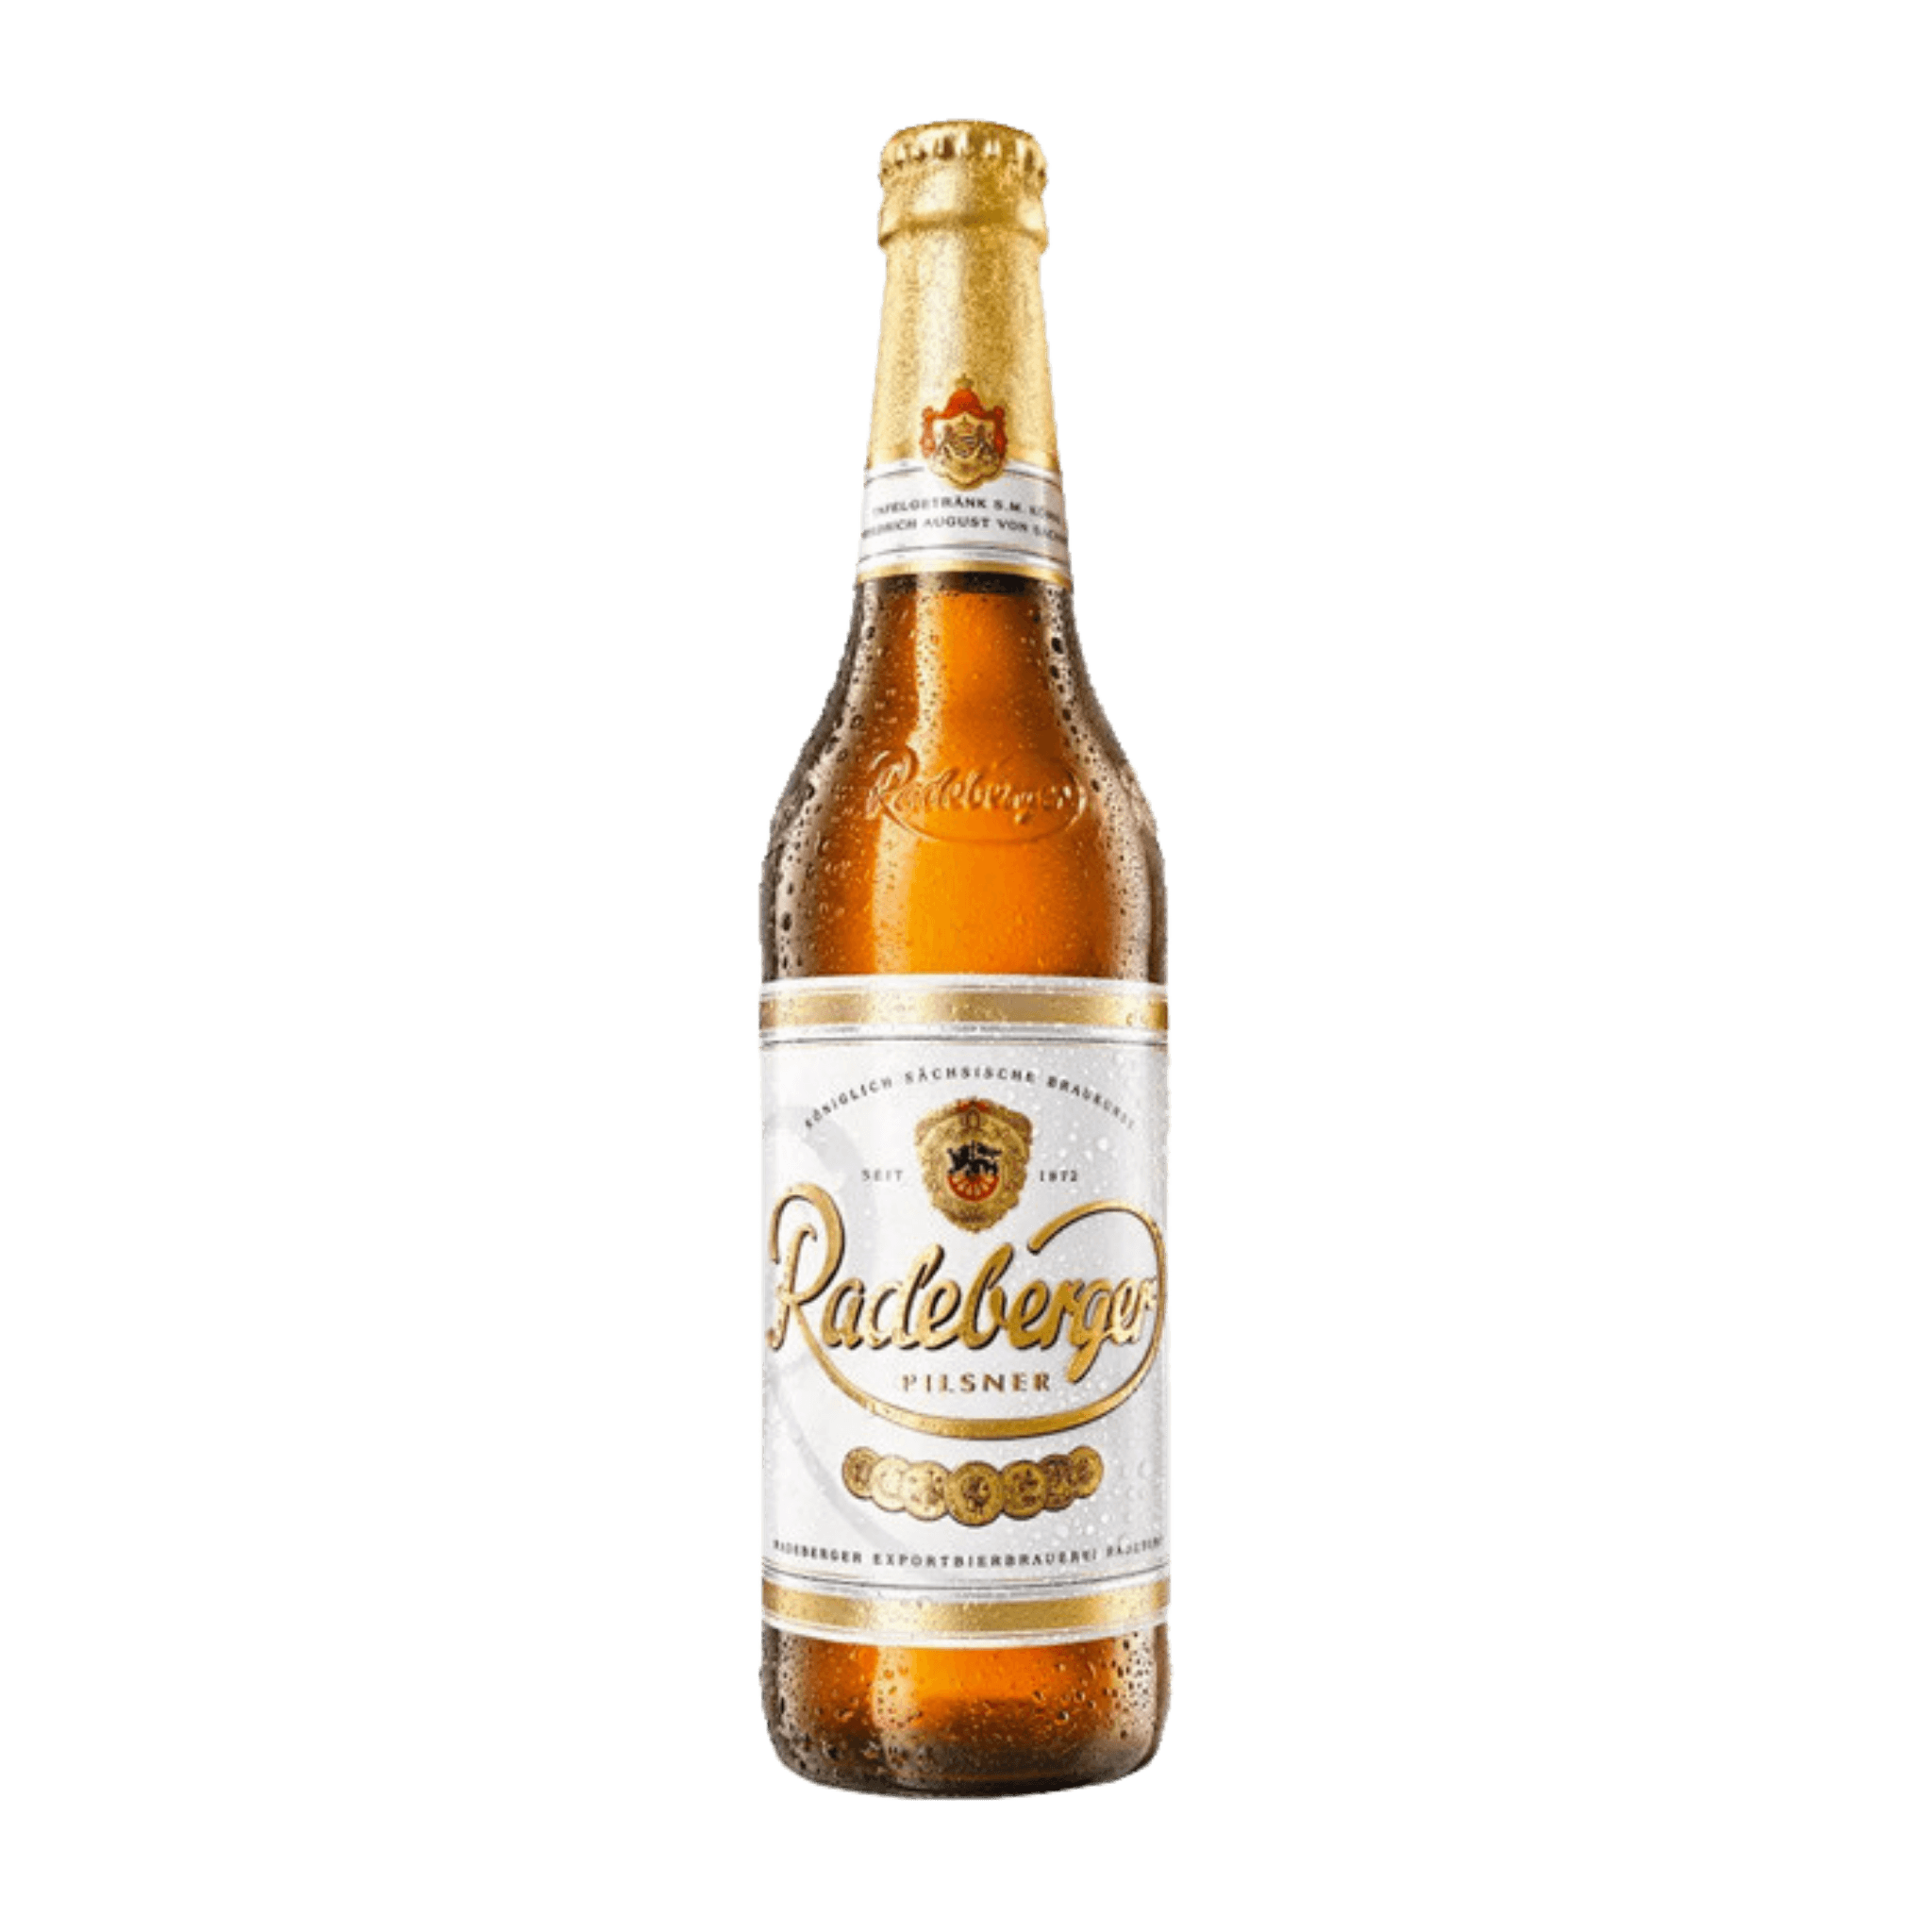 Radeberger Pilsner 500ml Bottle at ₱179.00